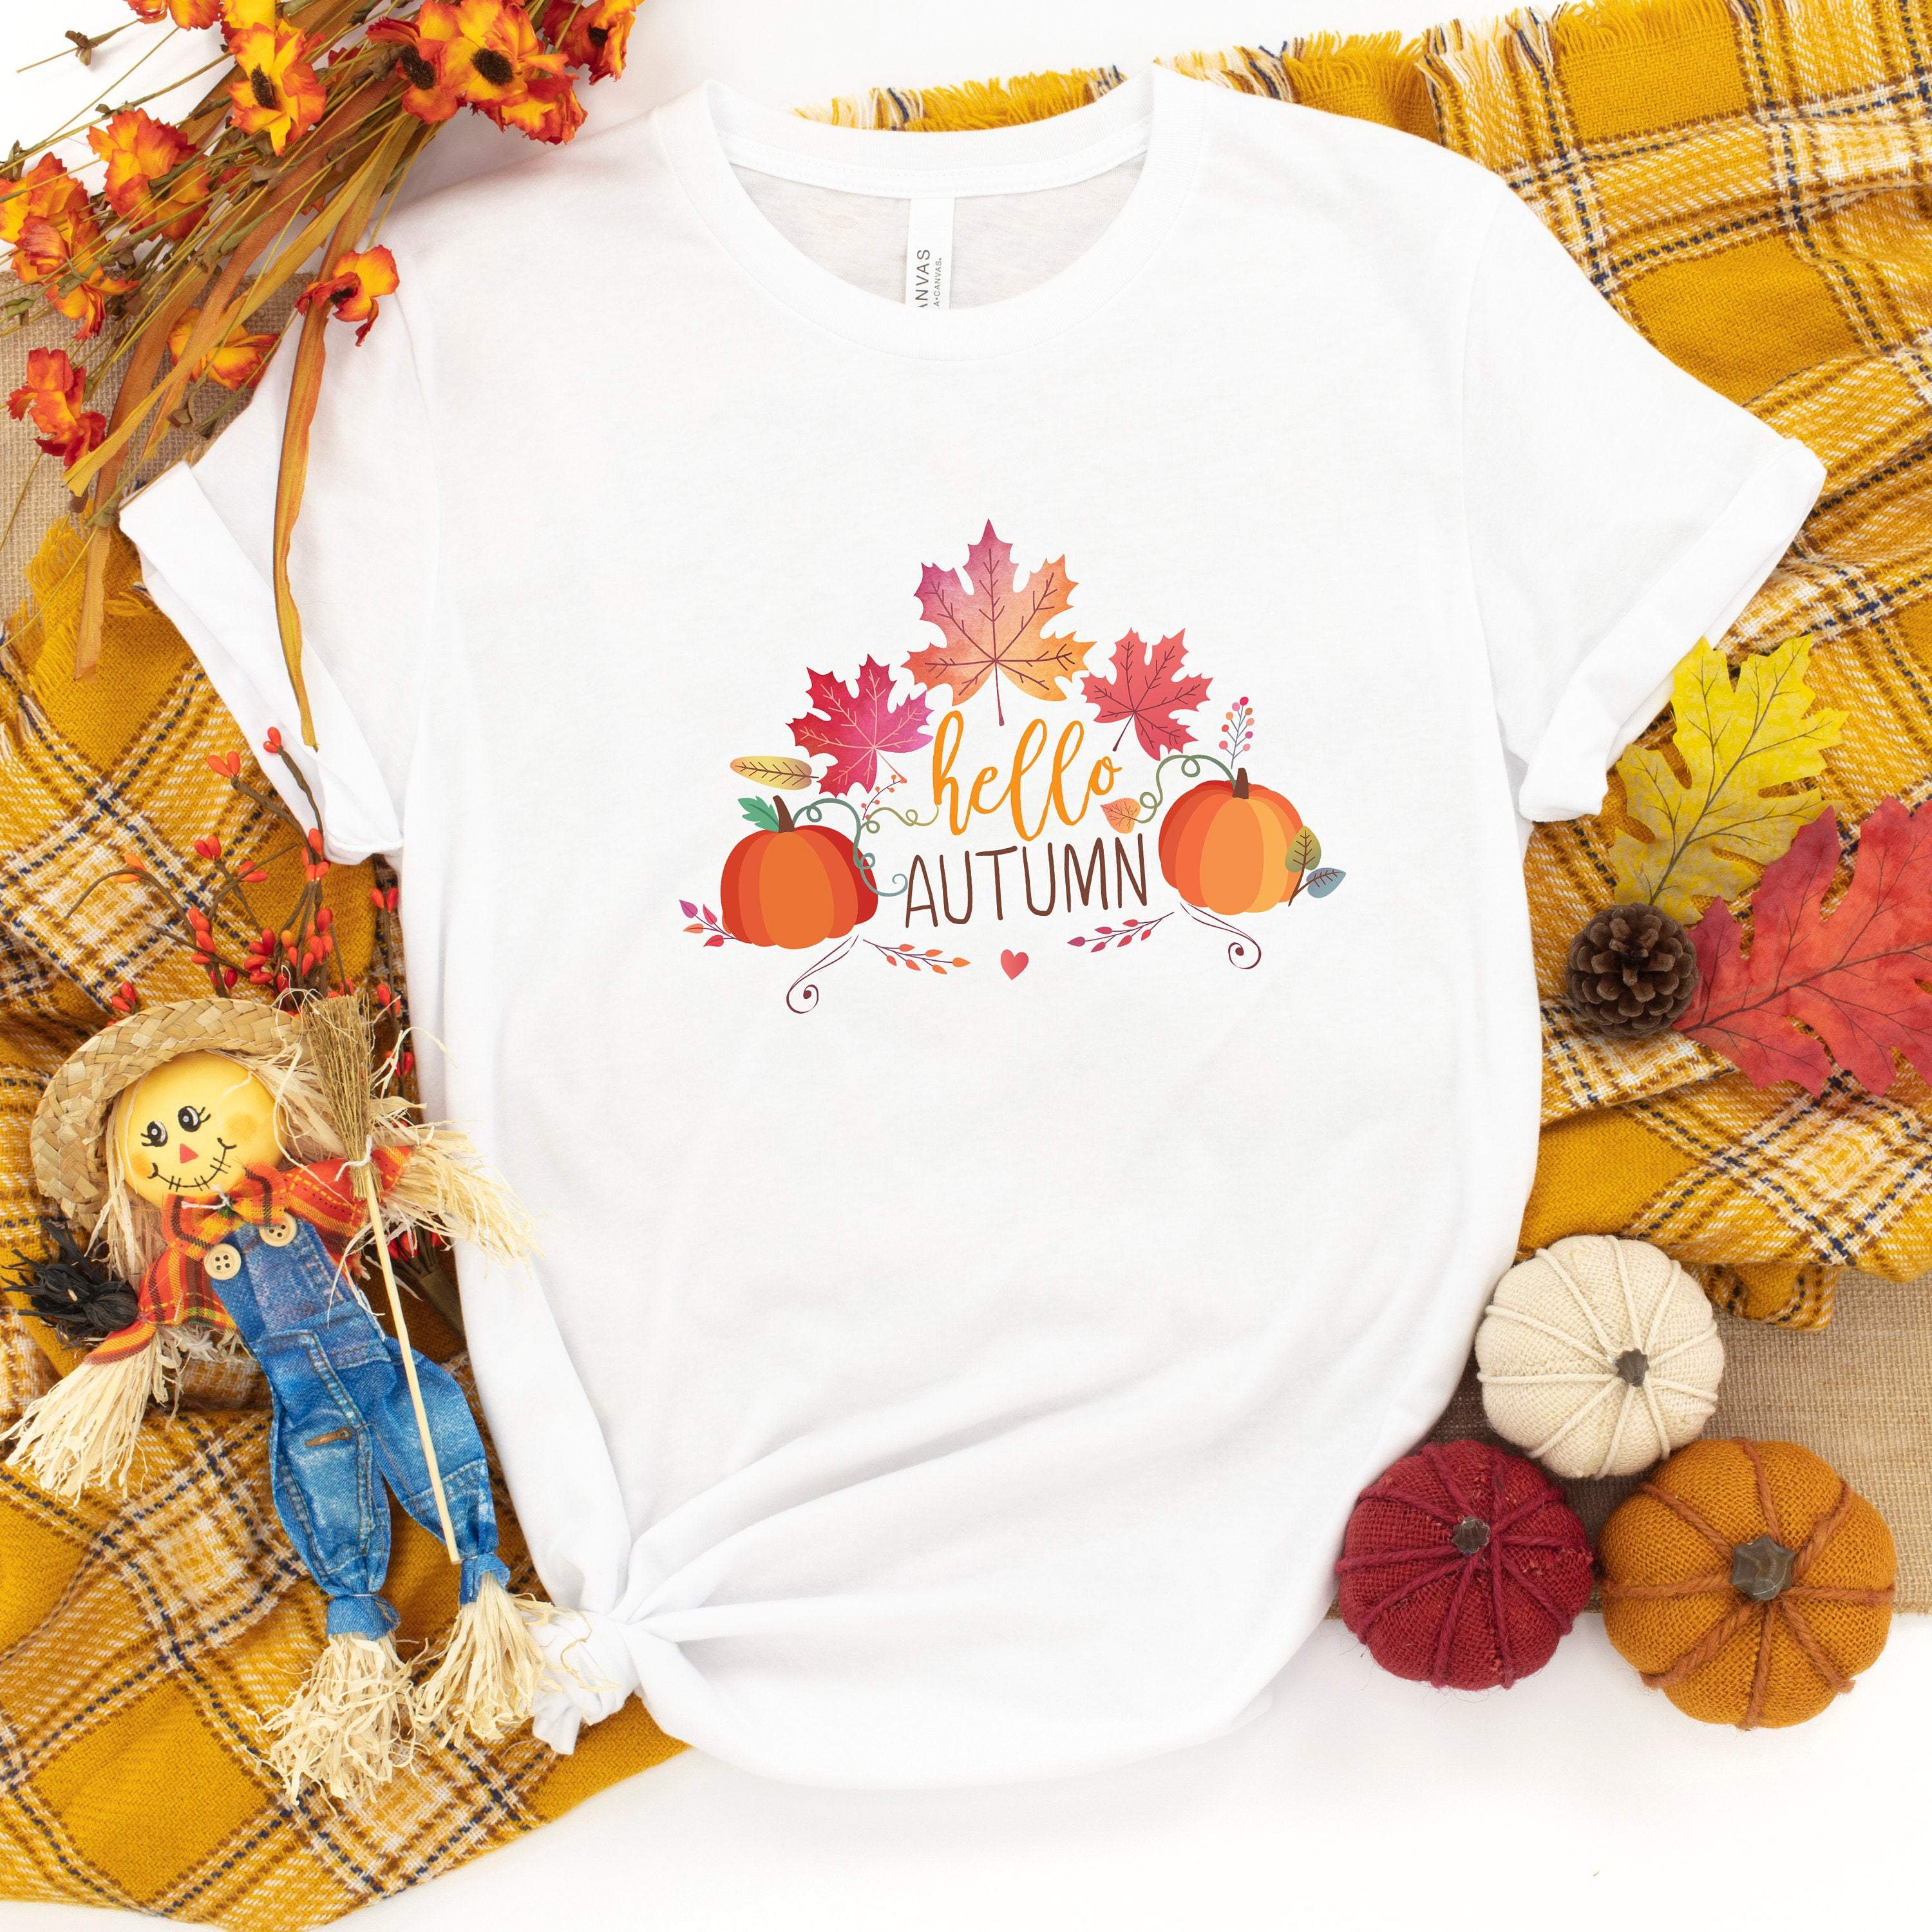 Hello Autumn t-shirt with autumn leaves and pumpkins, Fall Tshirt